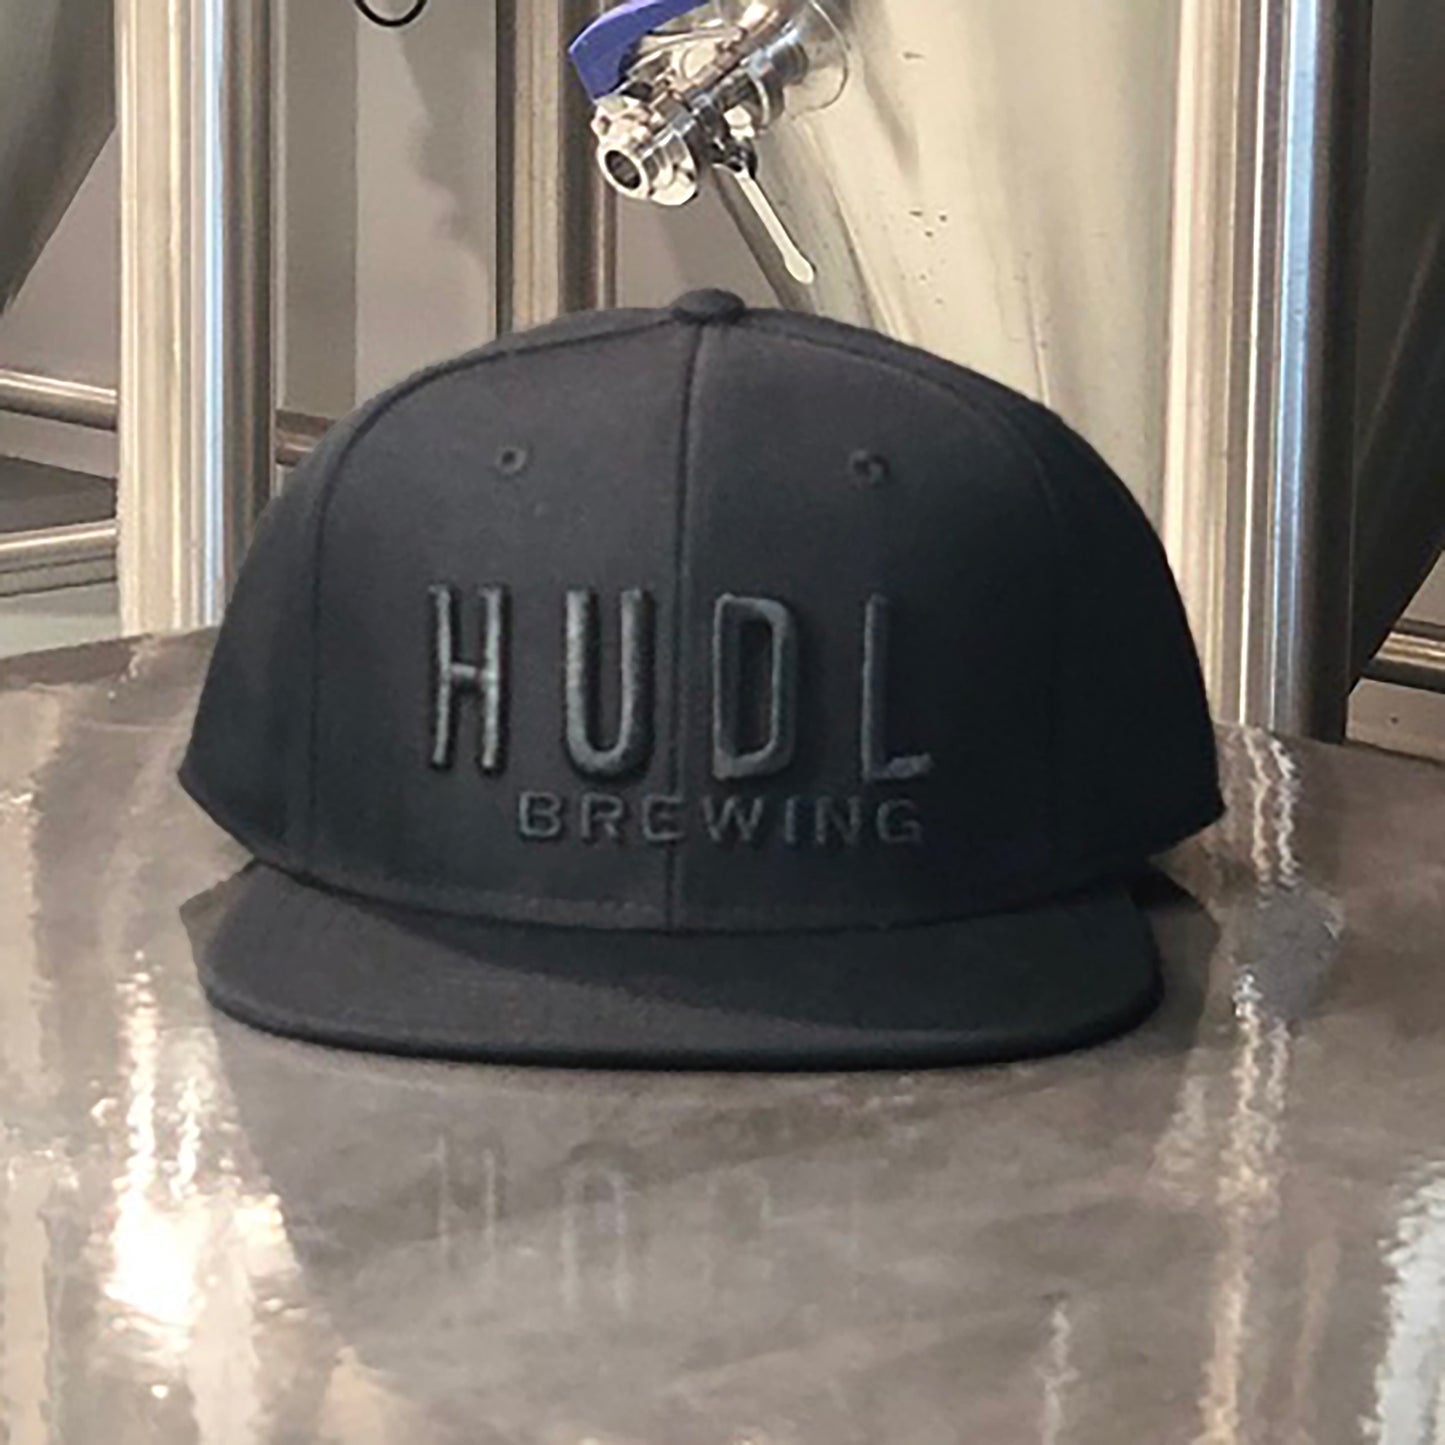 HUDL Brewing Flatbill Hat (Black)